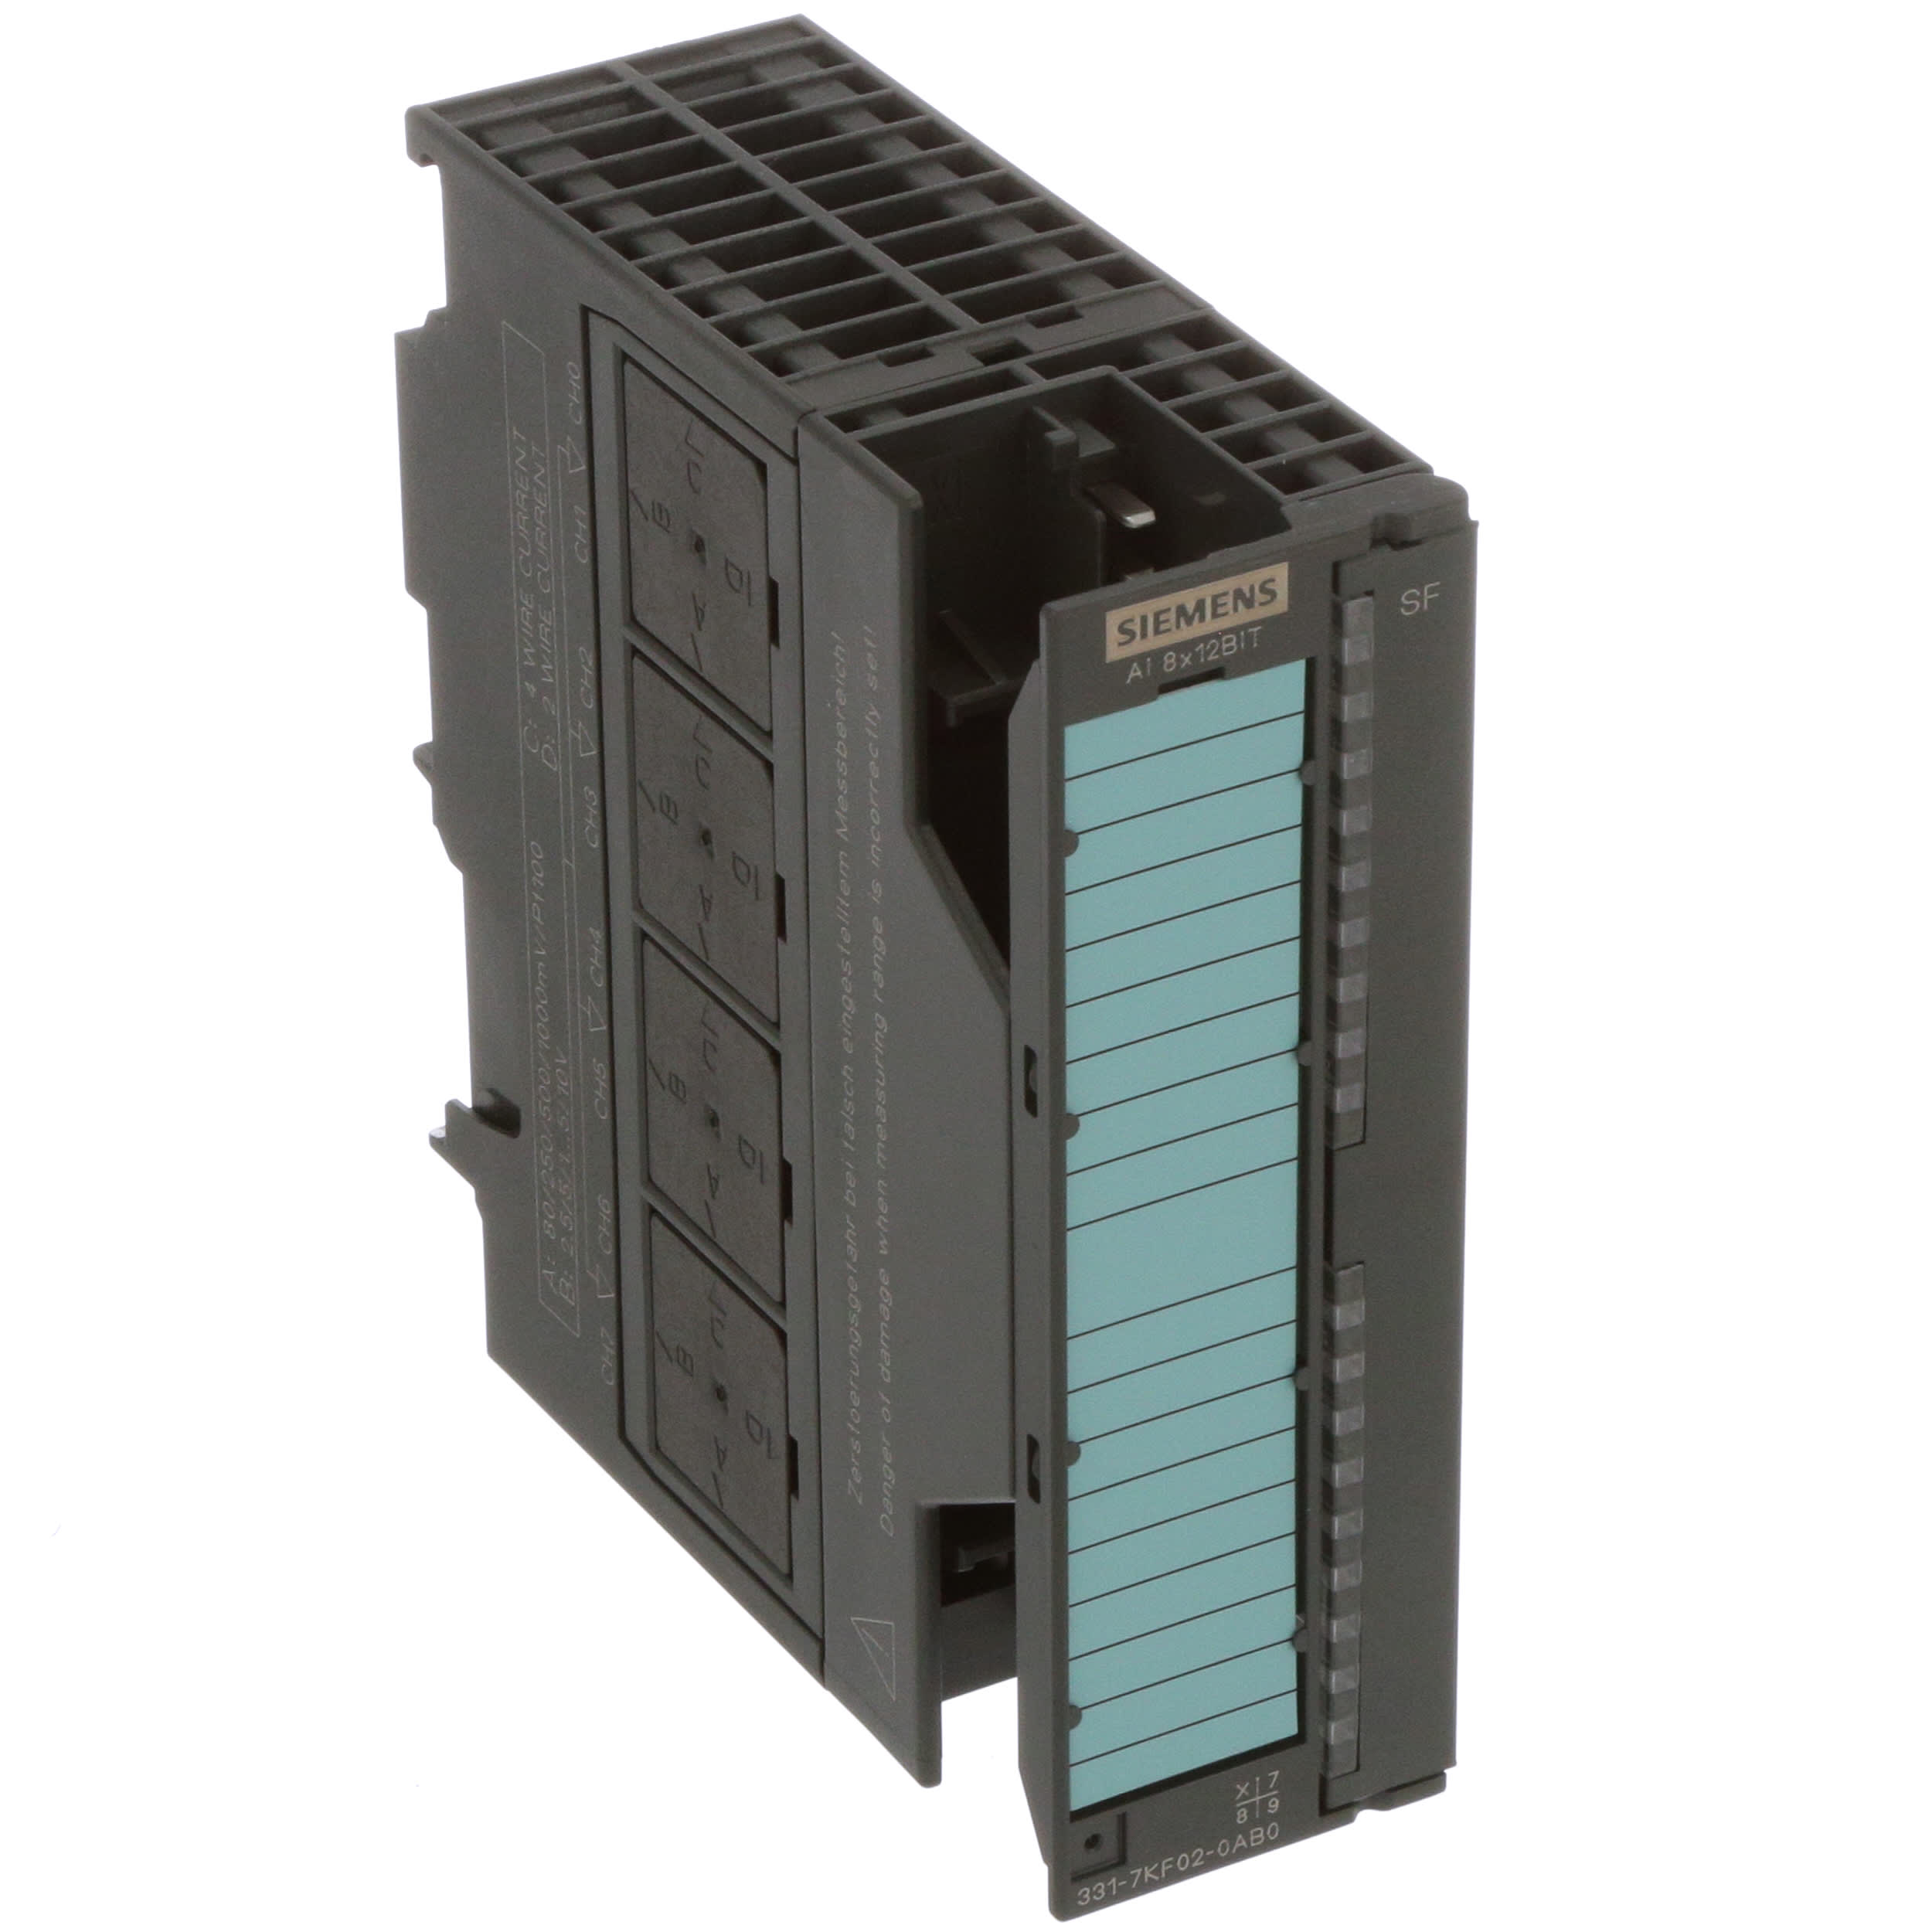 Siemens 6ES7 331-7KF02-0AB0 PLC Analogue Input Module for sale online